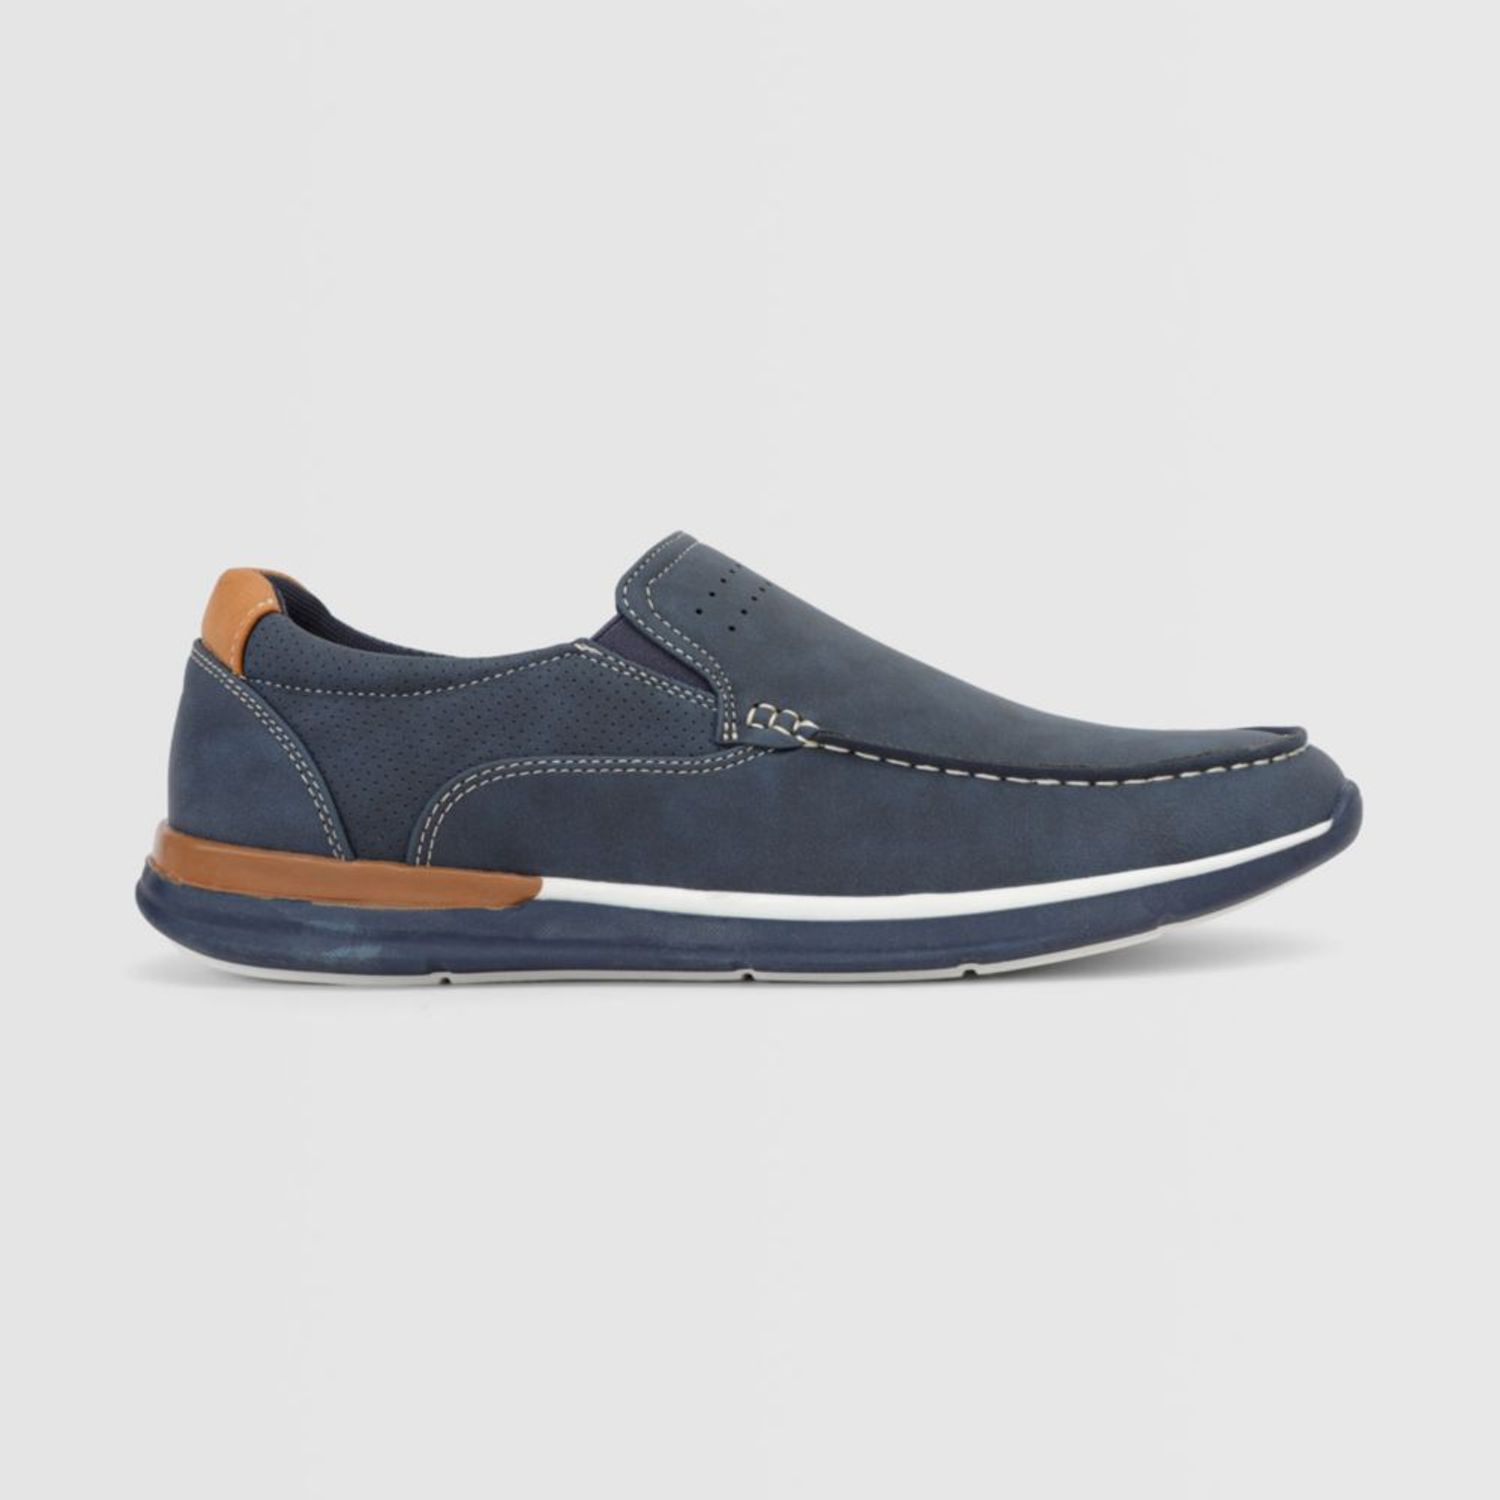 Zapatos Casuales para Hombre Moca Fwme-00104 Azul | Oechsle - Oechsle